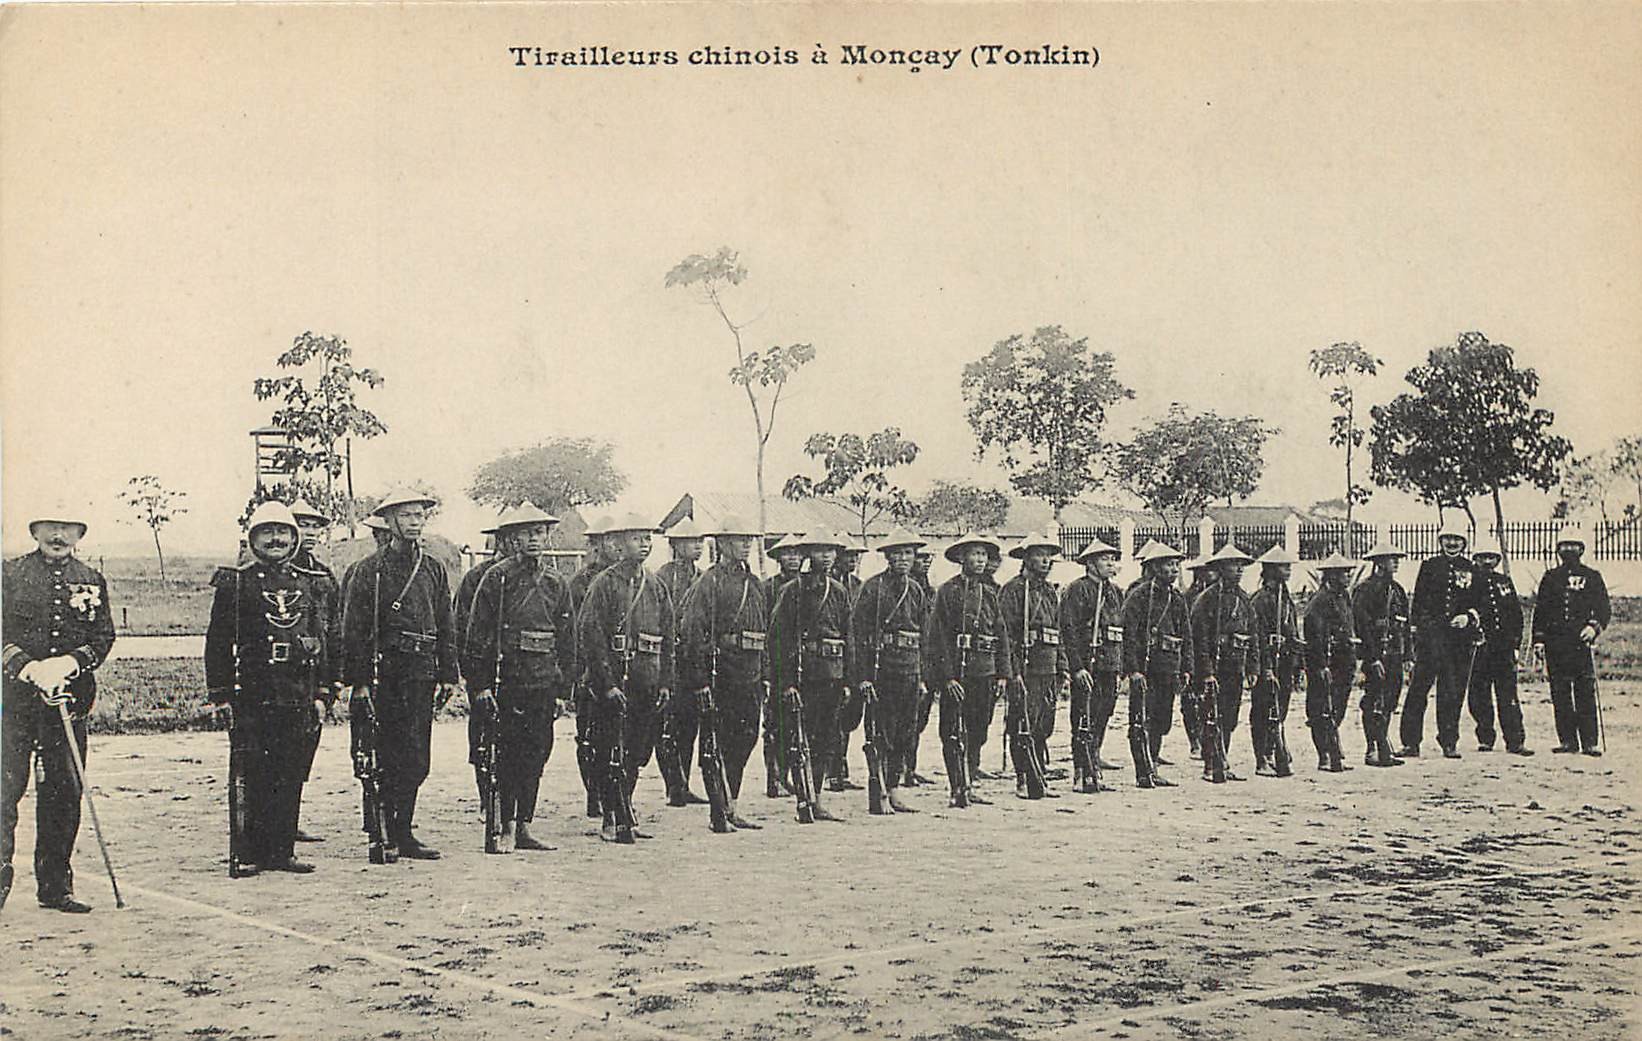 TONKIN. Tirailleurs chinois à Monçay vers 1900